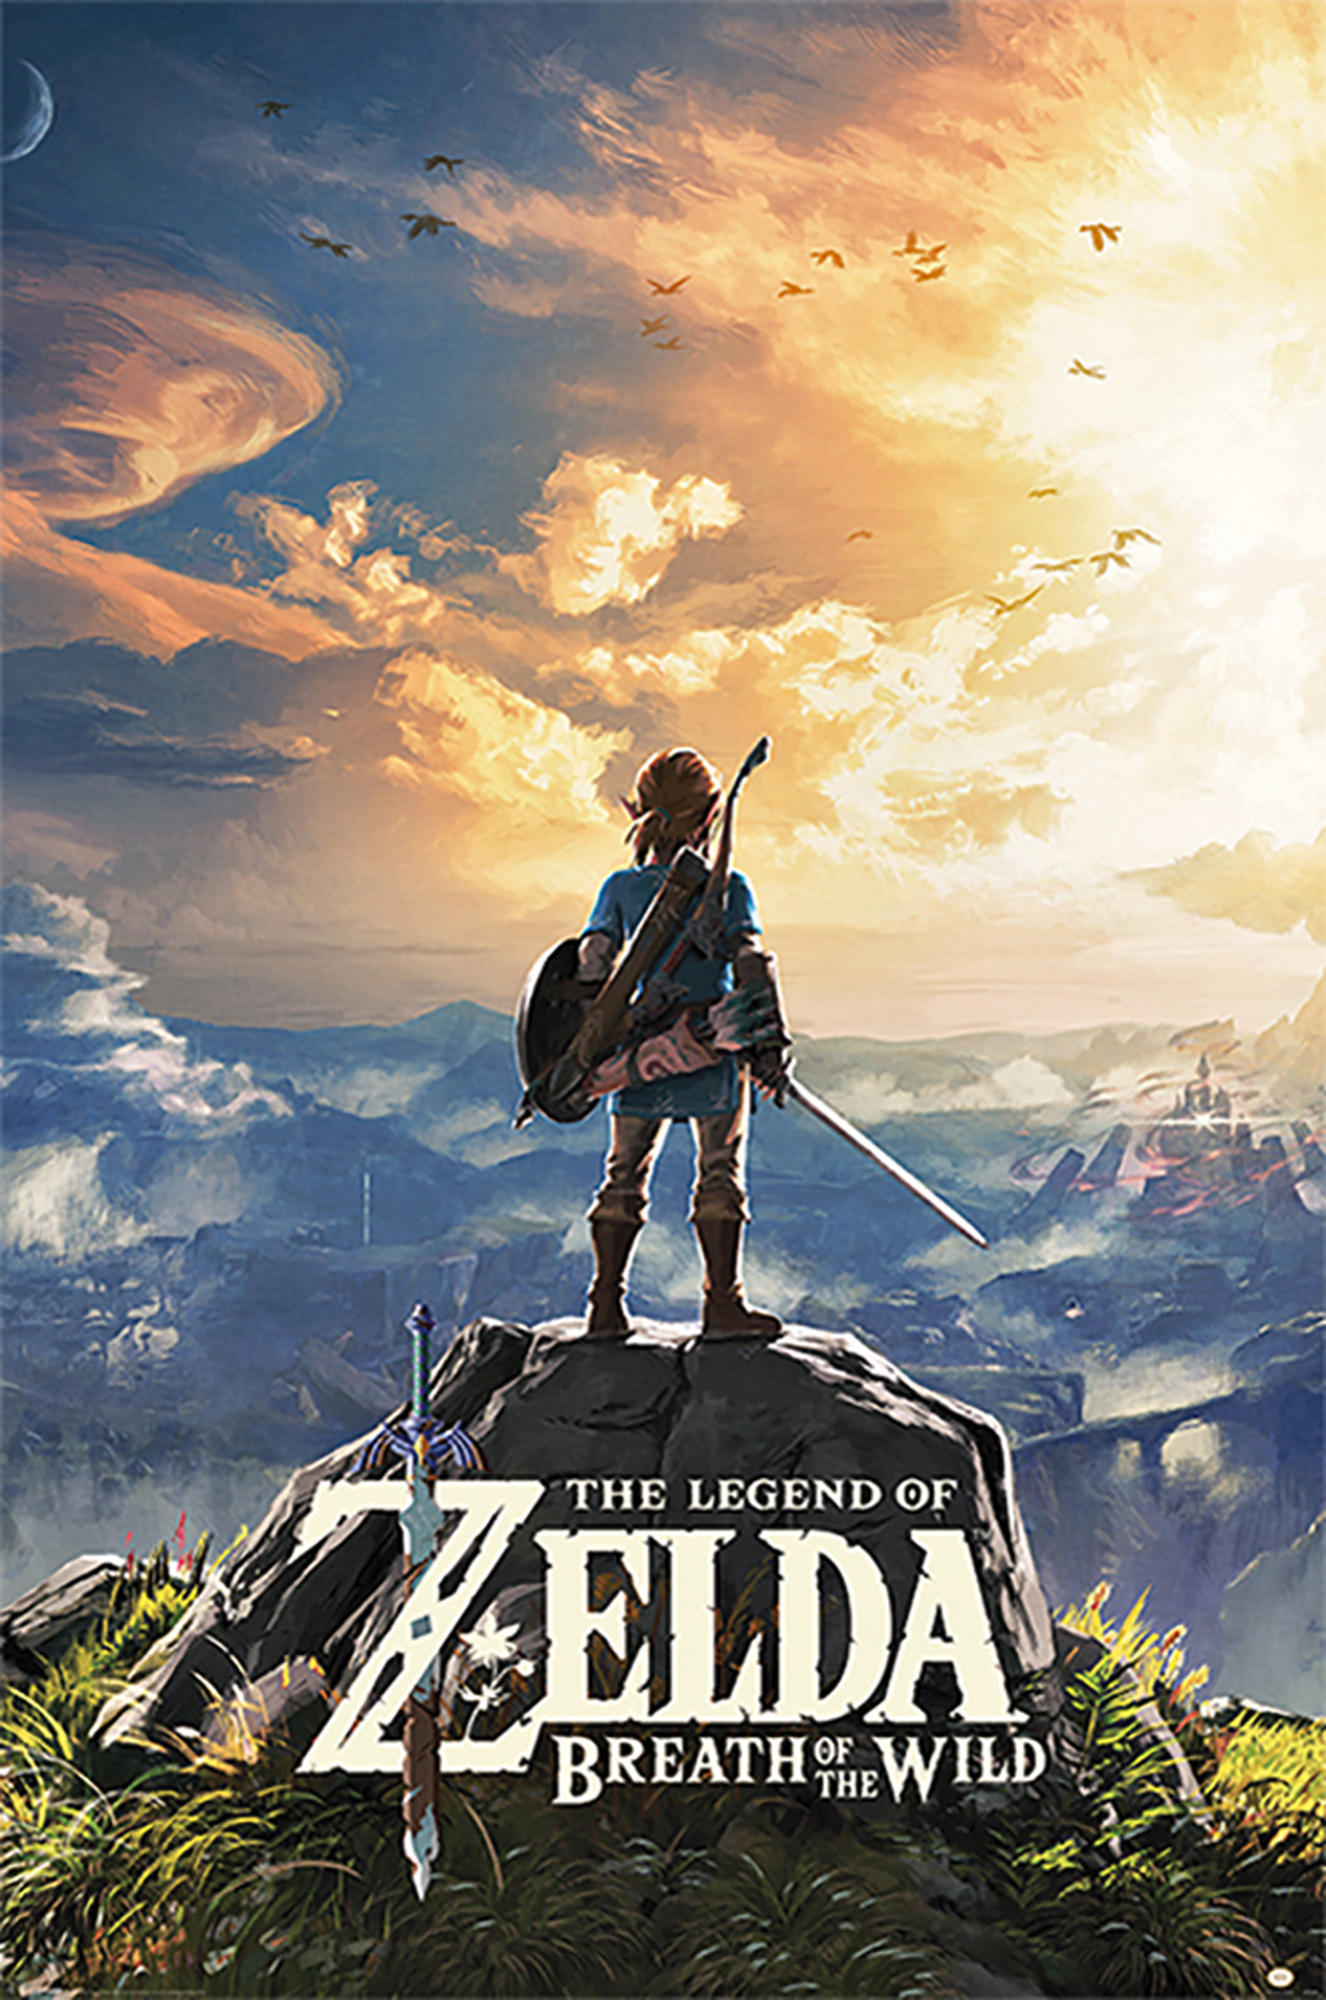 PYRAMID INTERNATIONAL The Legend Wild Großformatige Poster The Of Sunset Zelda Breath of Poster